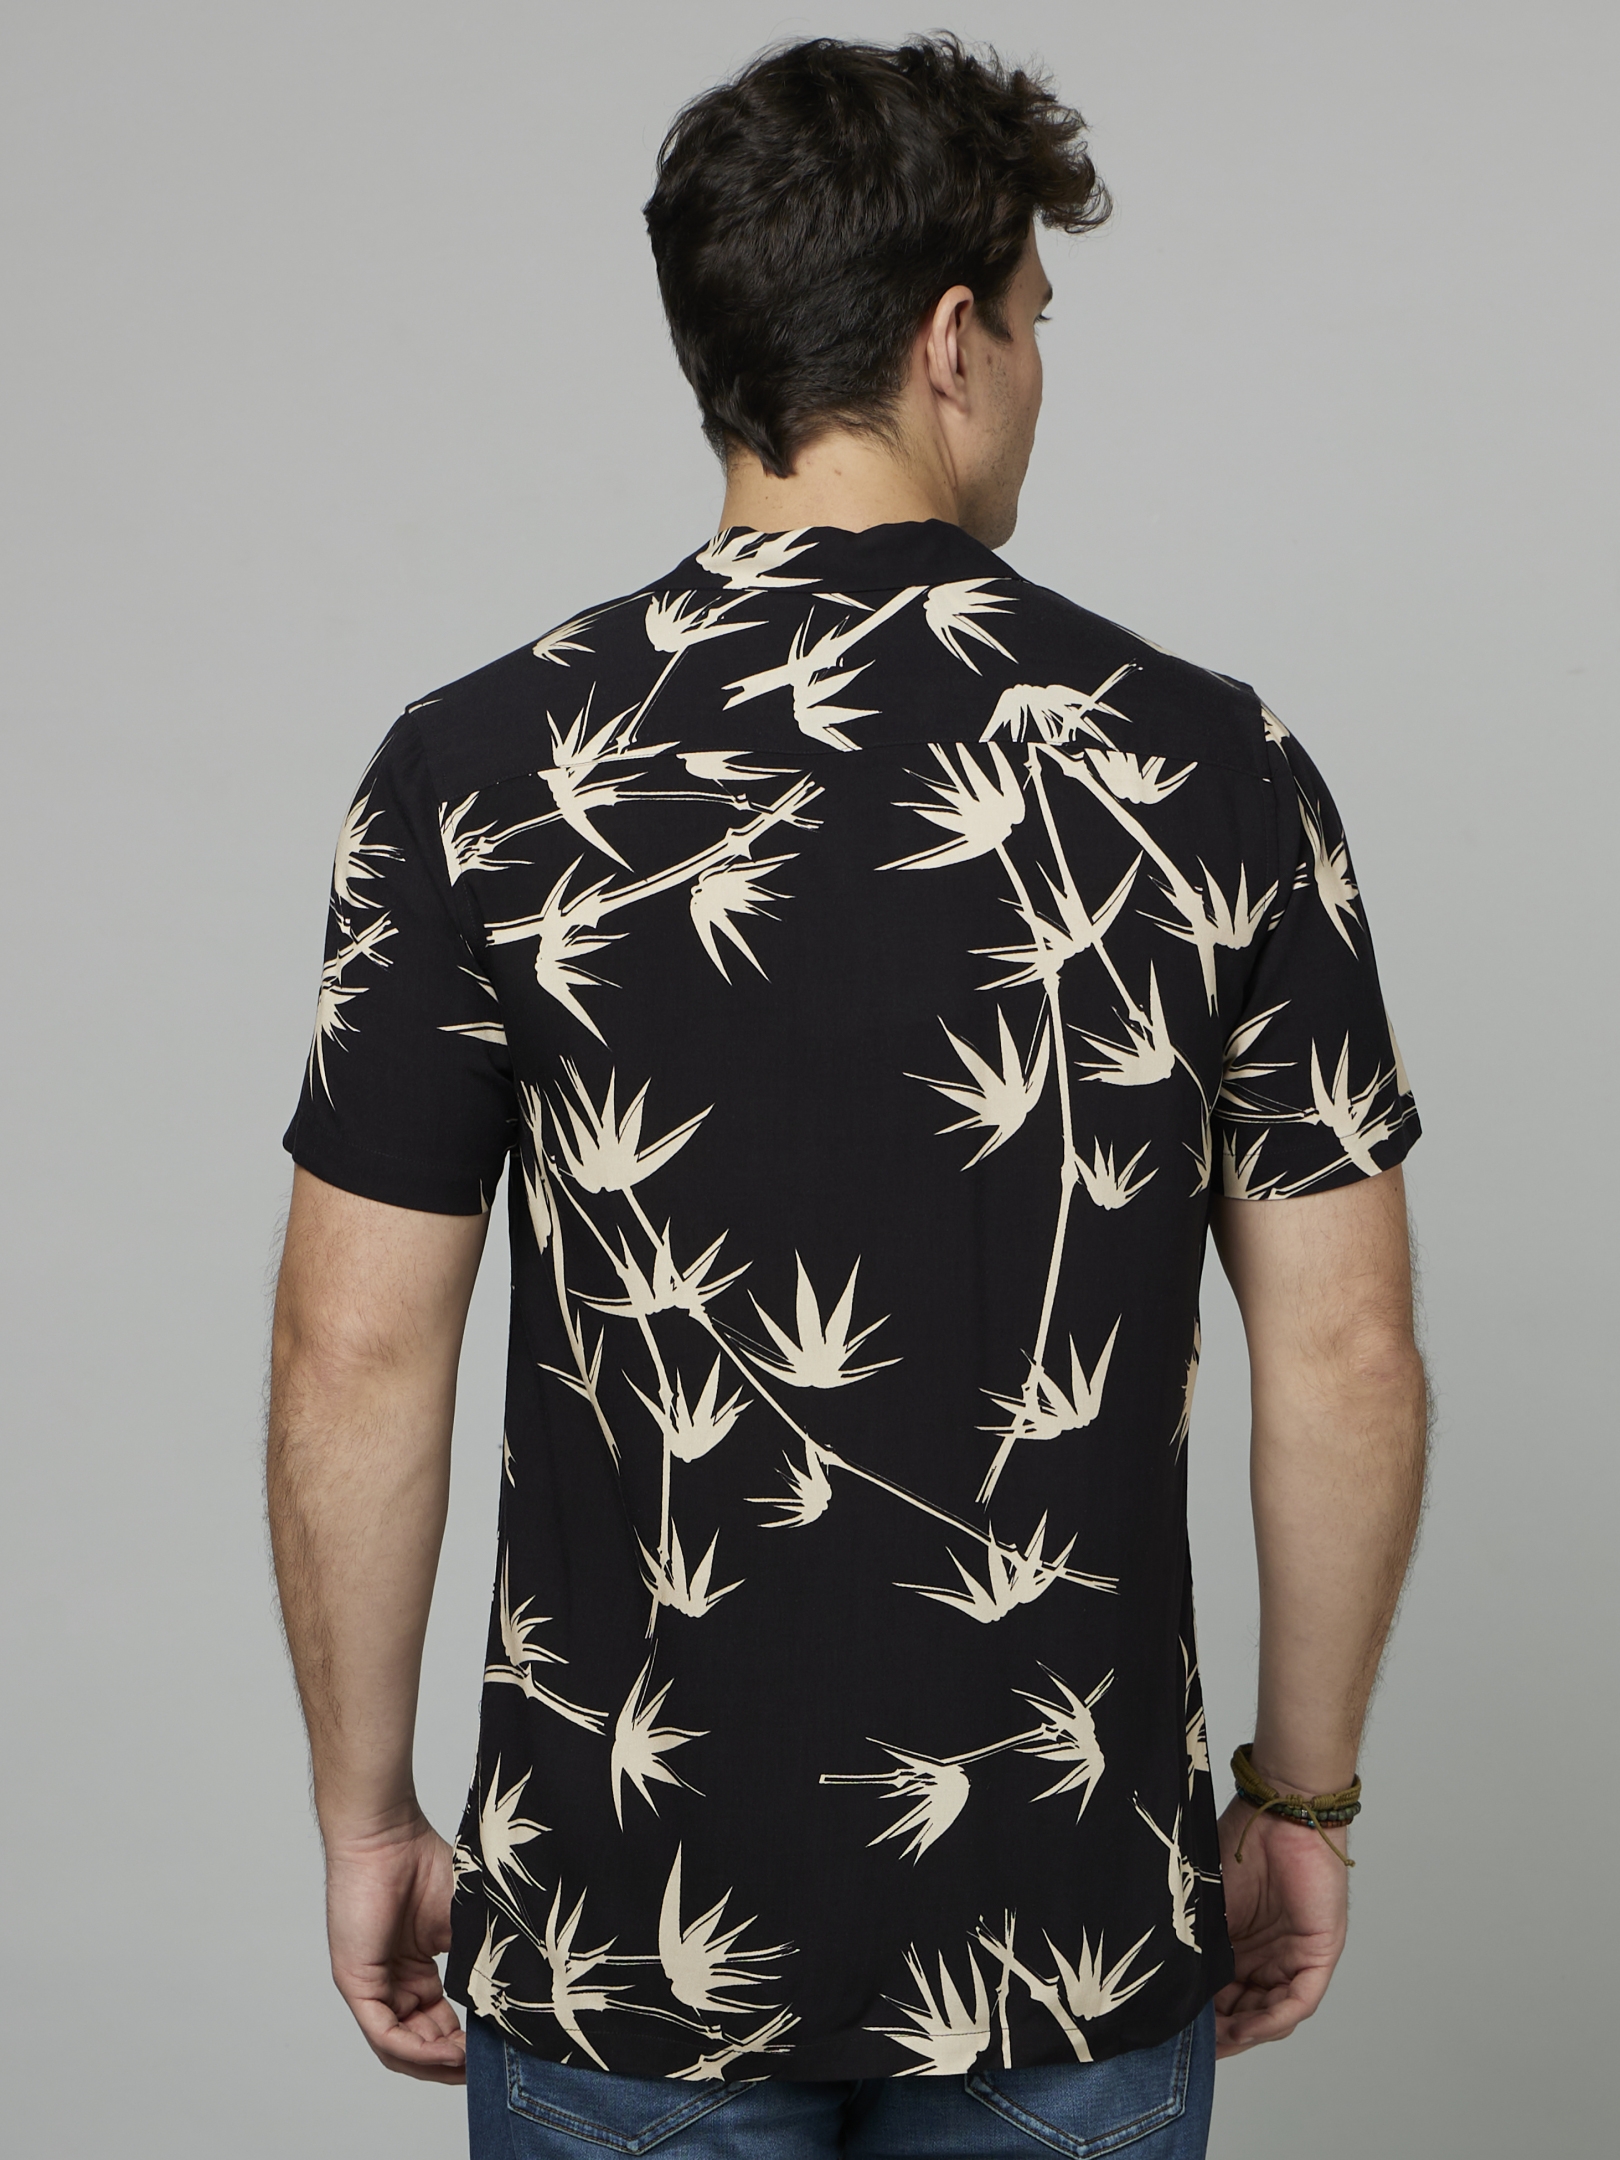 Men's Black Floral Casual Shirts